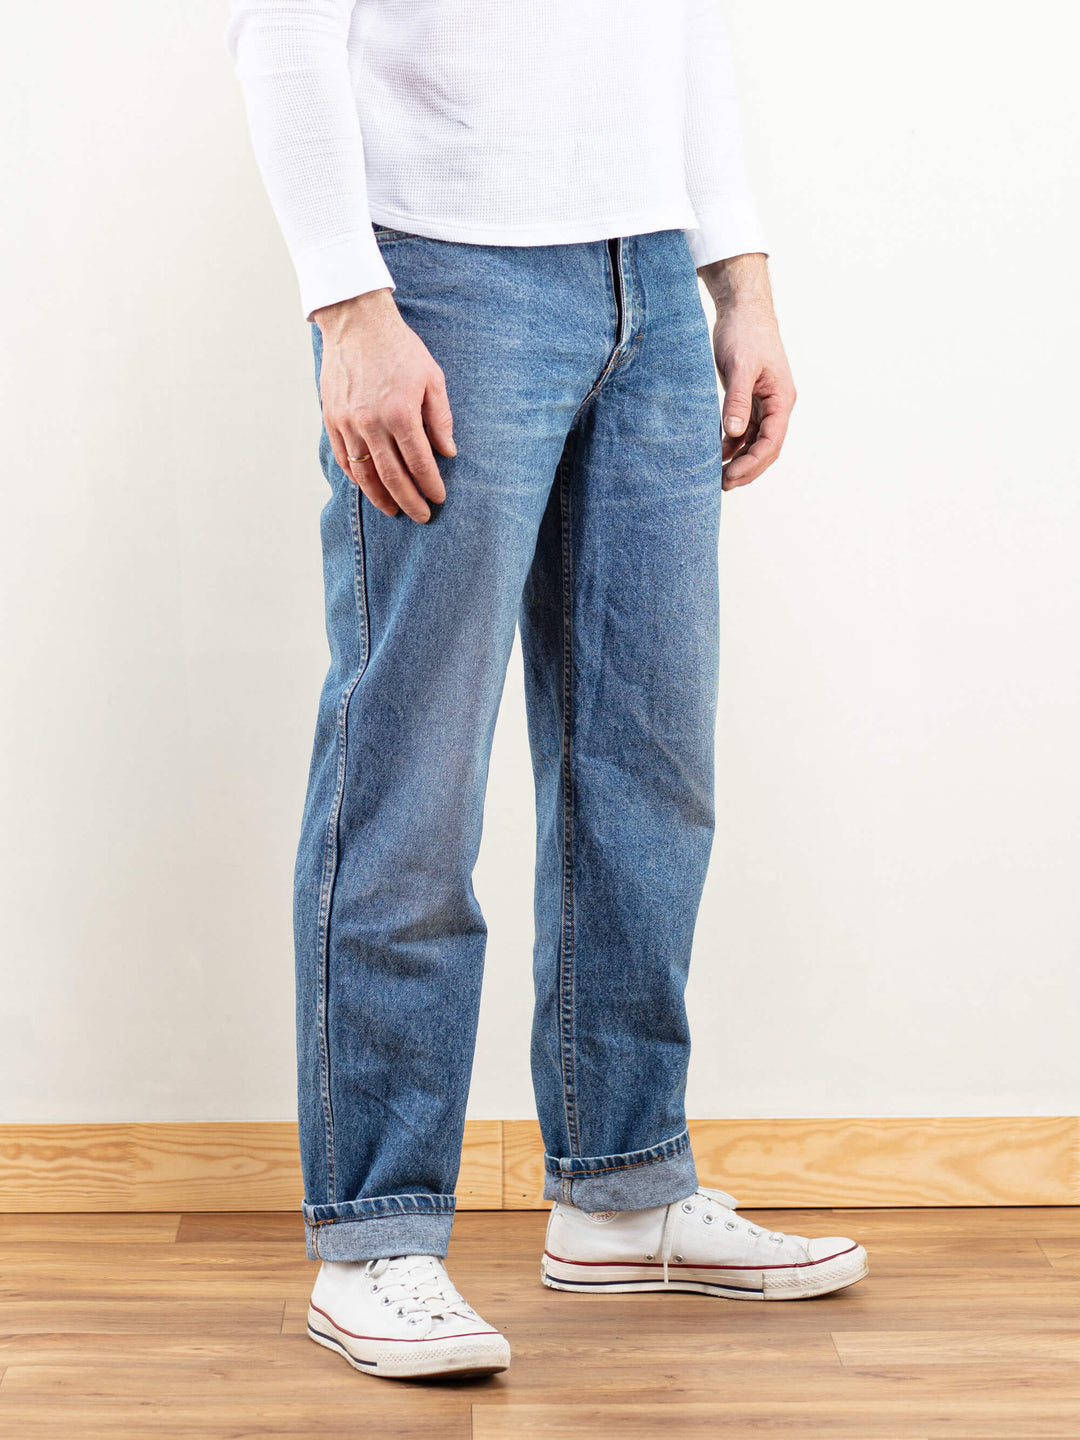 Vintage 90's Men Faded Jeans